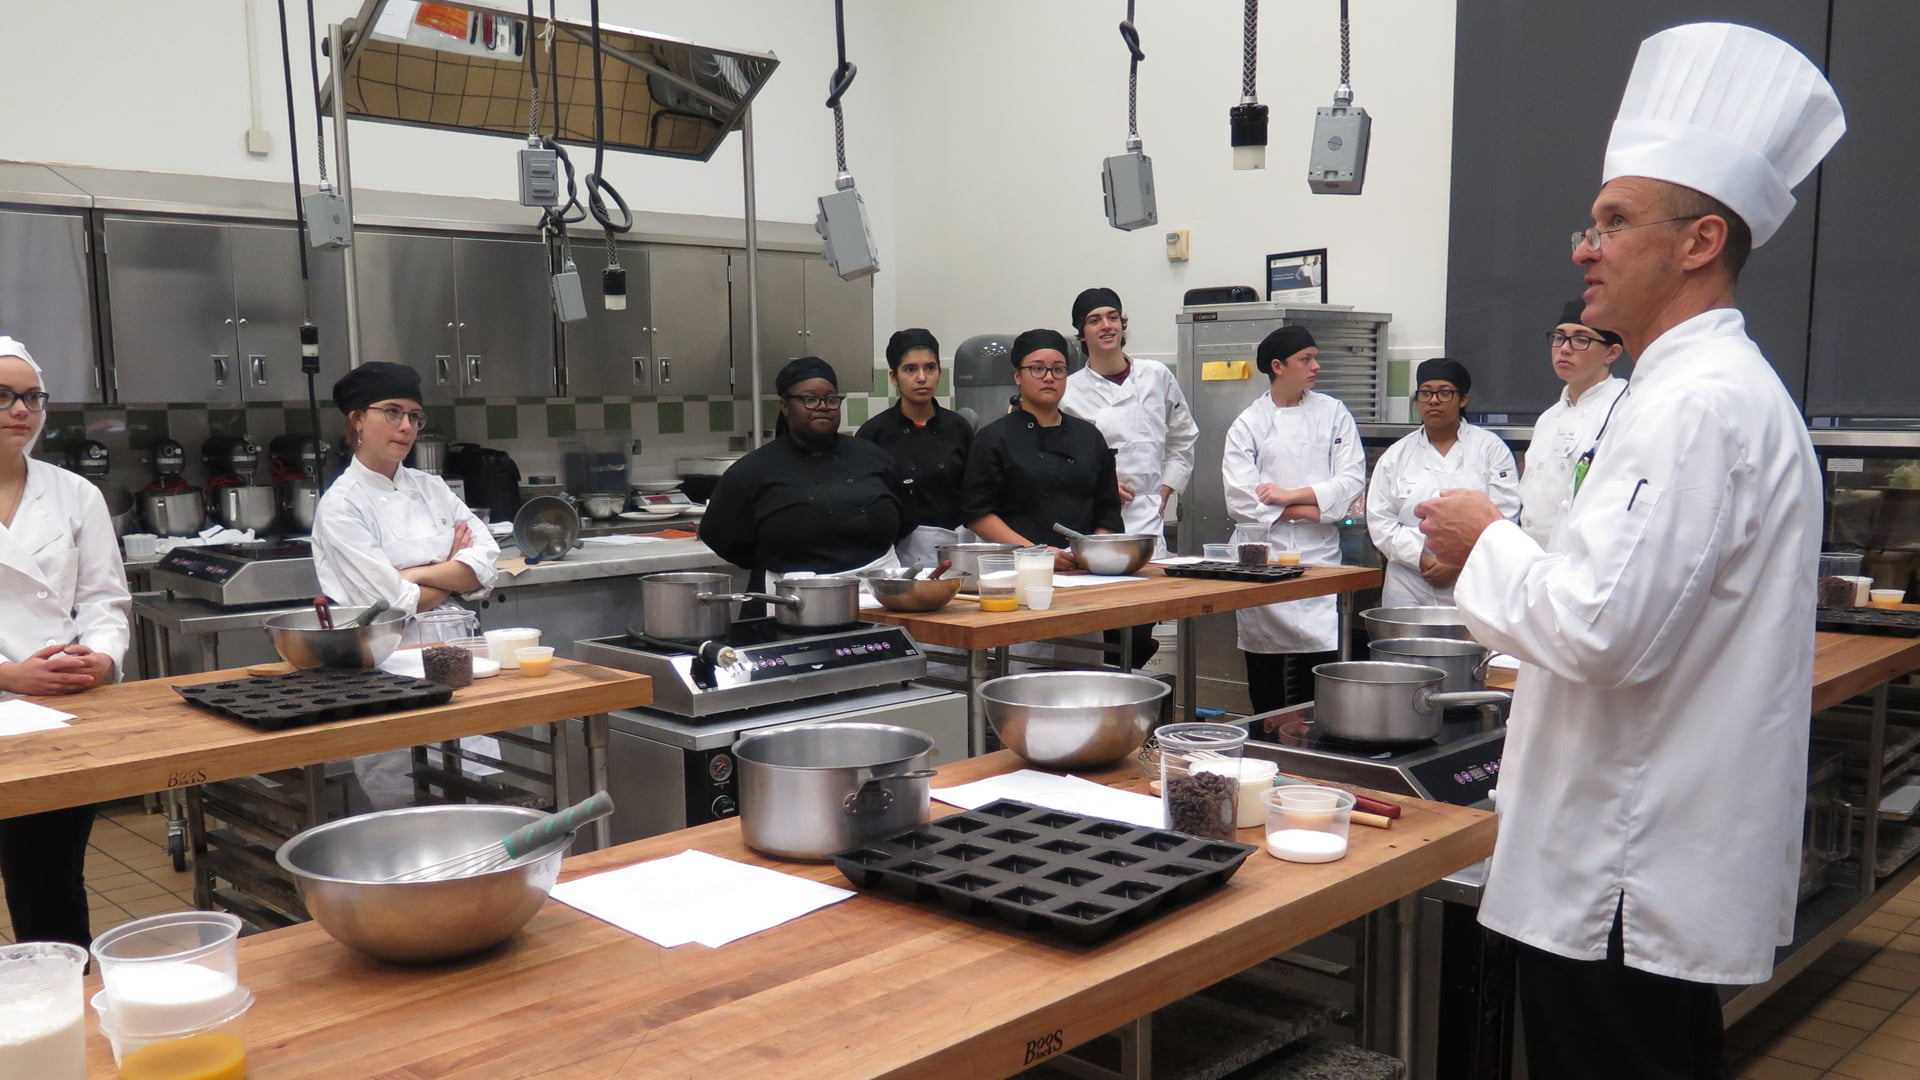 JWU Charlotte hosts a ProStart culinary boot camp for aspiring high school chefs. 